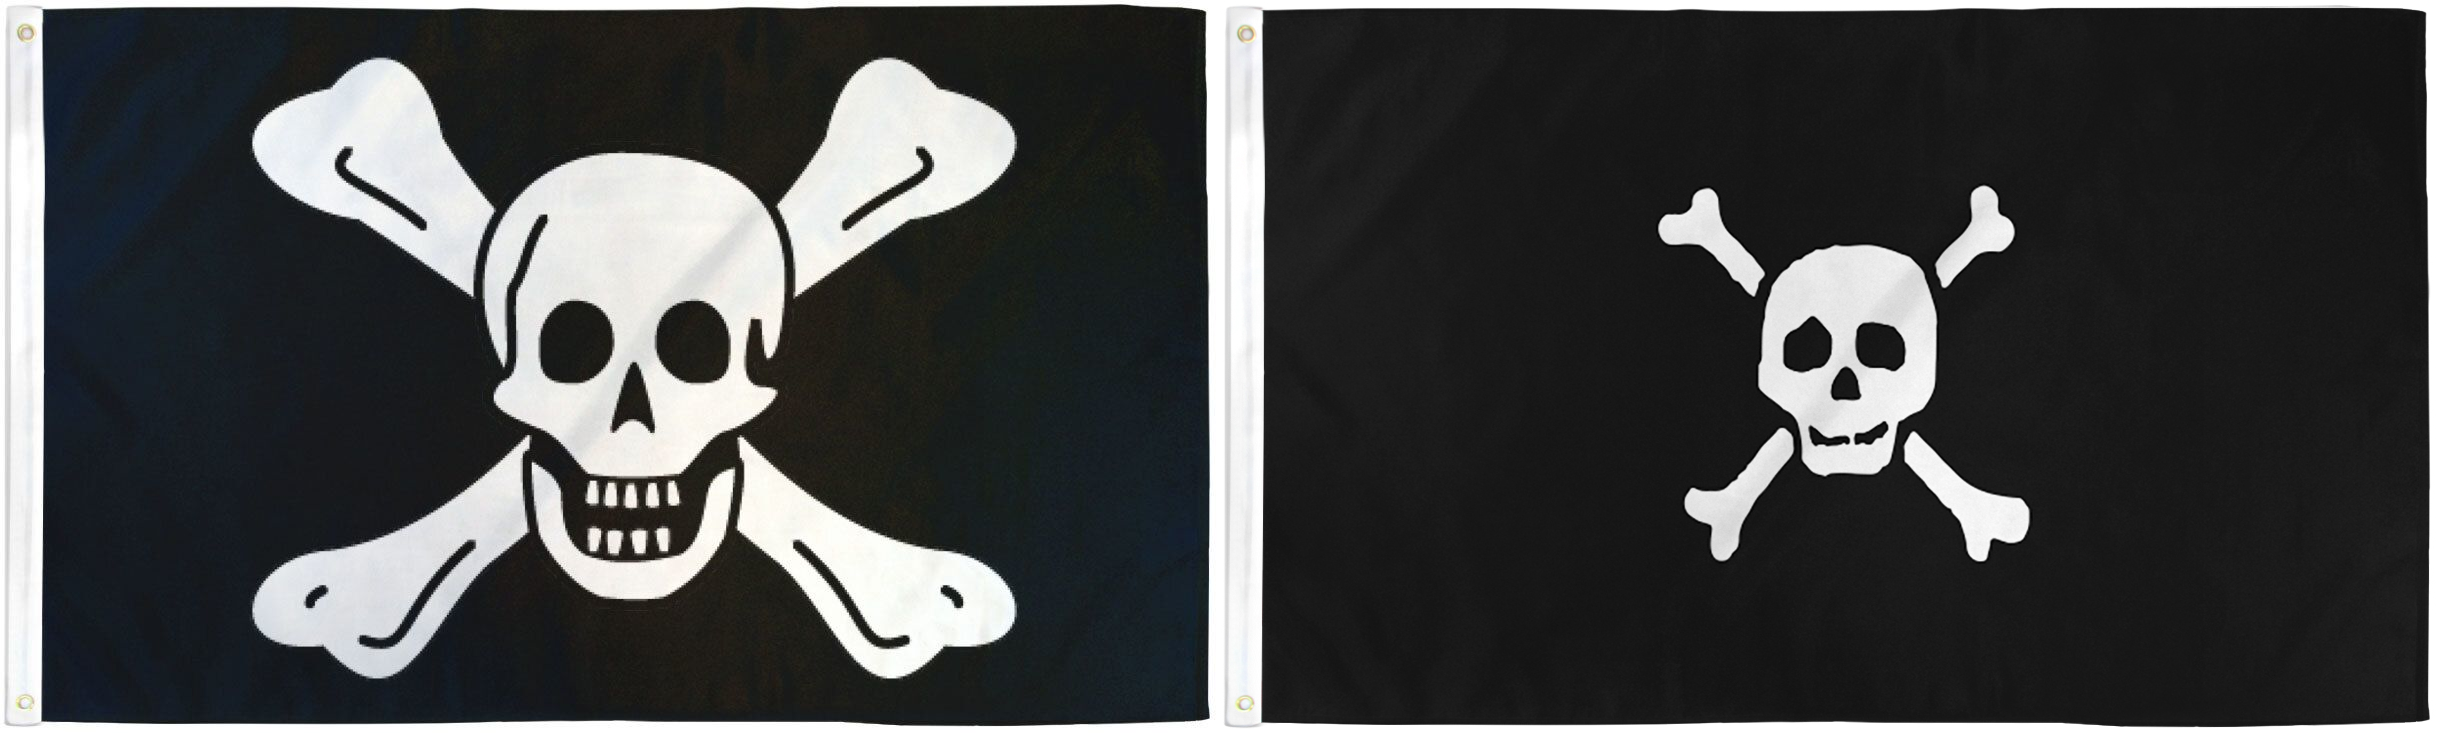 Richard Worley (Large Skull) 3x5ft Pirate Flag & Richard Worley (small skull) 3x5ft Pirate Flag